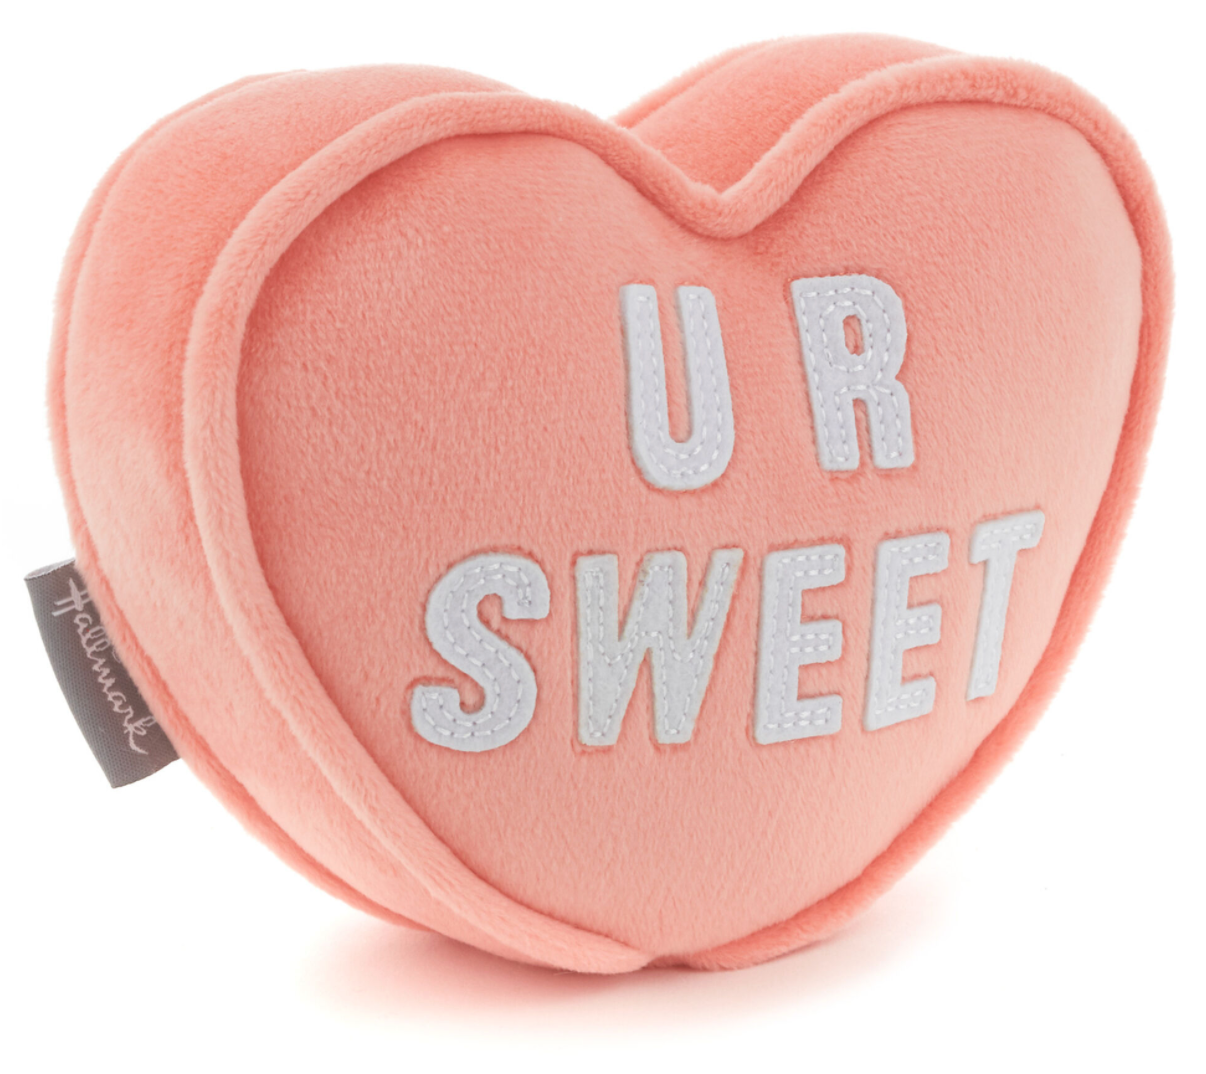 Hallmark Valentine U R Sweet Candy Heart Plush With Pocket New with Tag